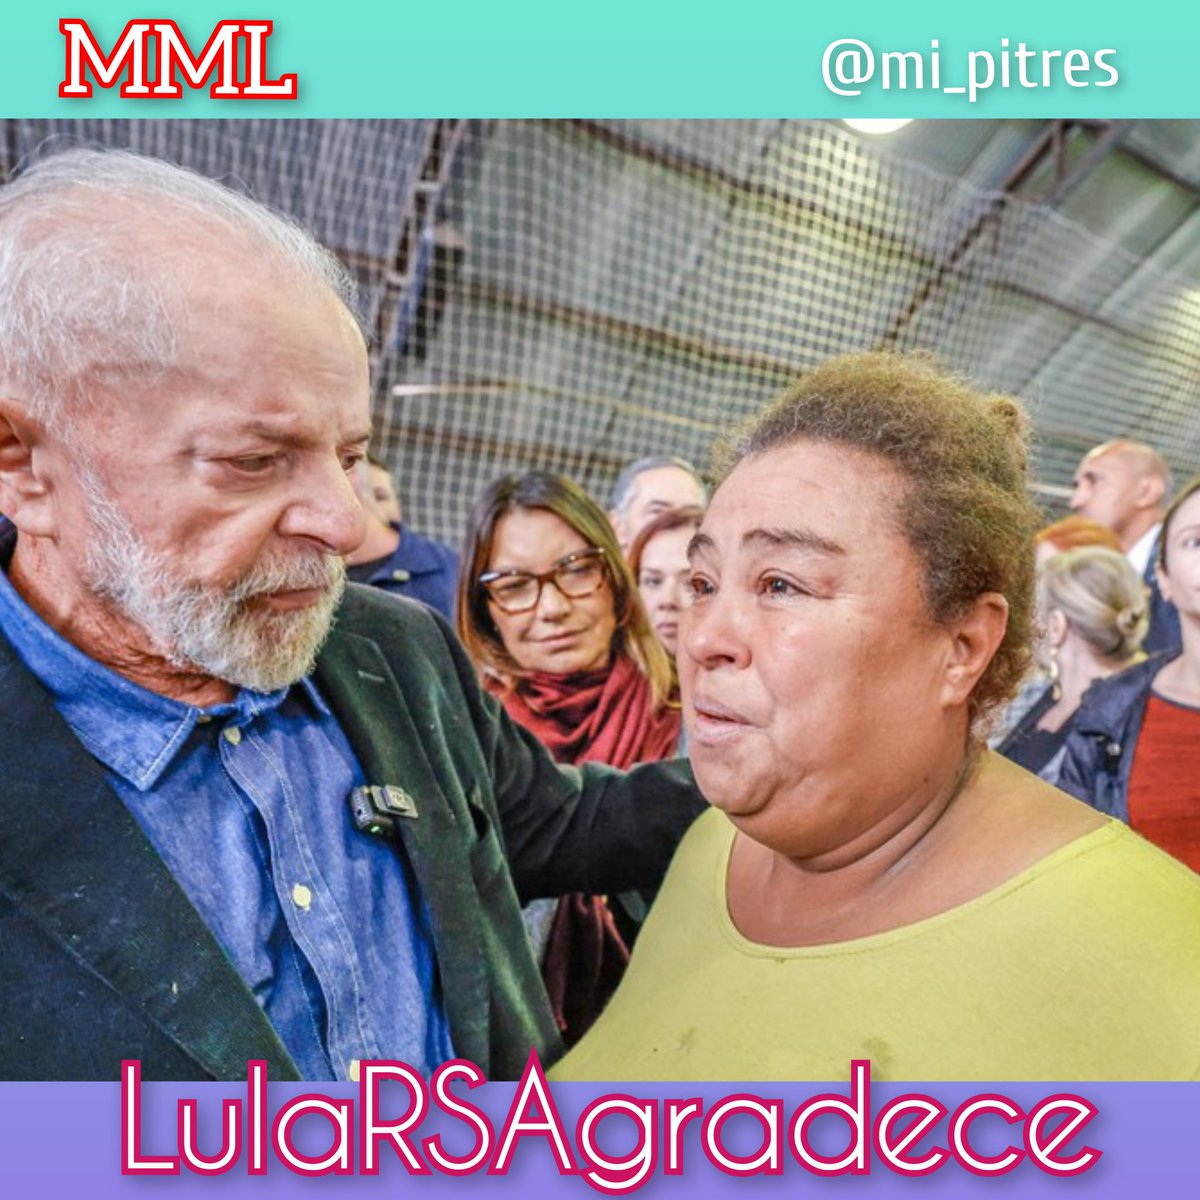 @fabymachados @LulaOficial #LulaRSAgradece